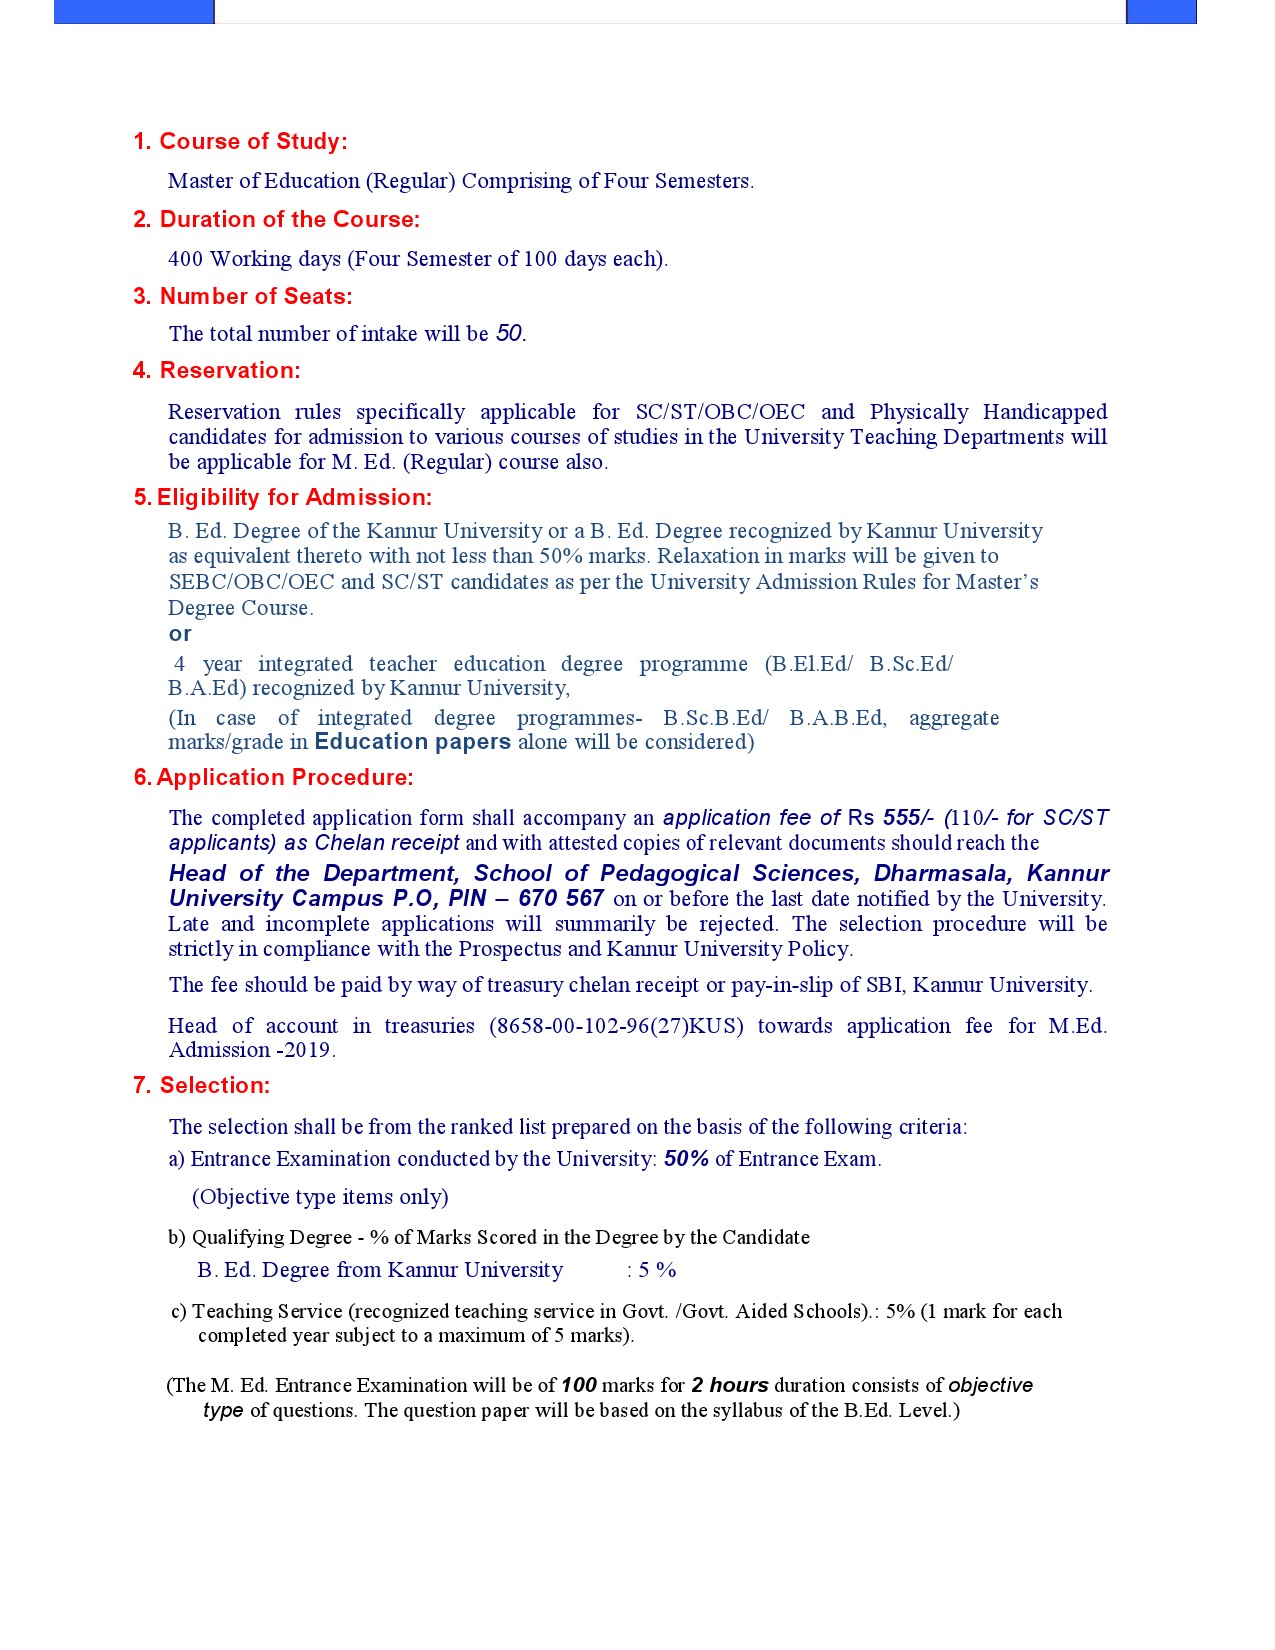 Kannur University M Ed Admission Prospectus 2019 - Notification Image 4